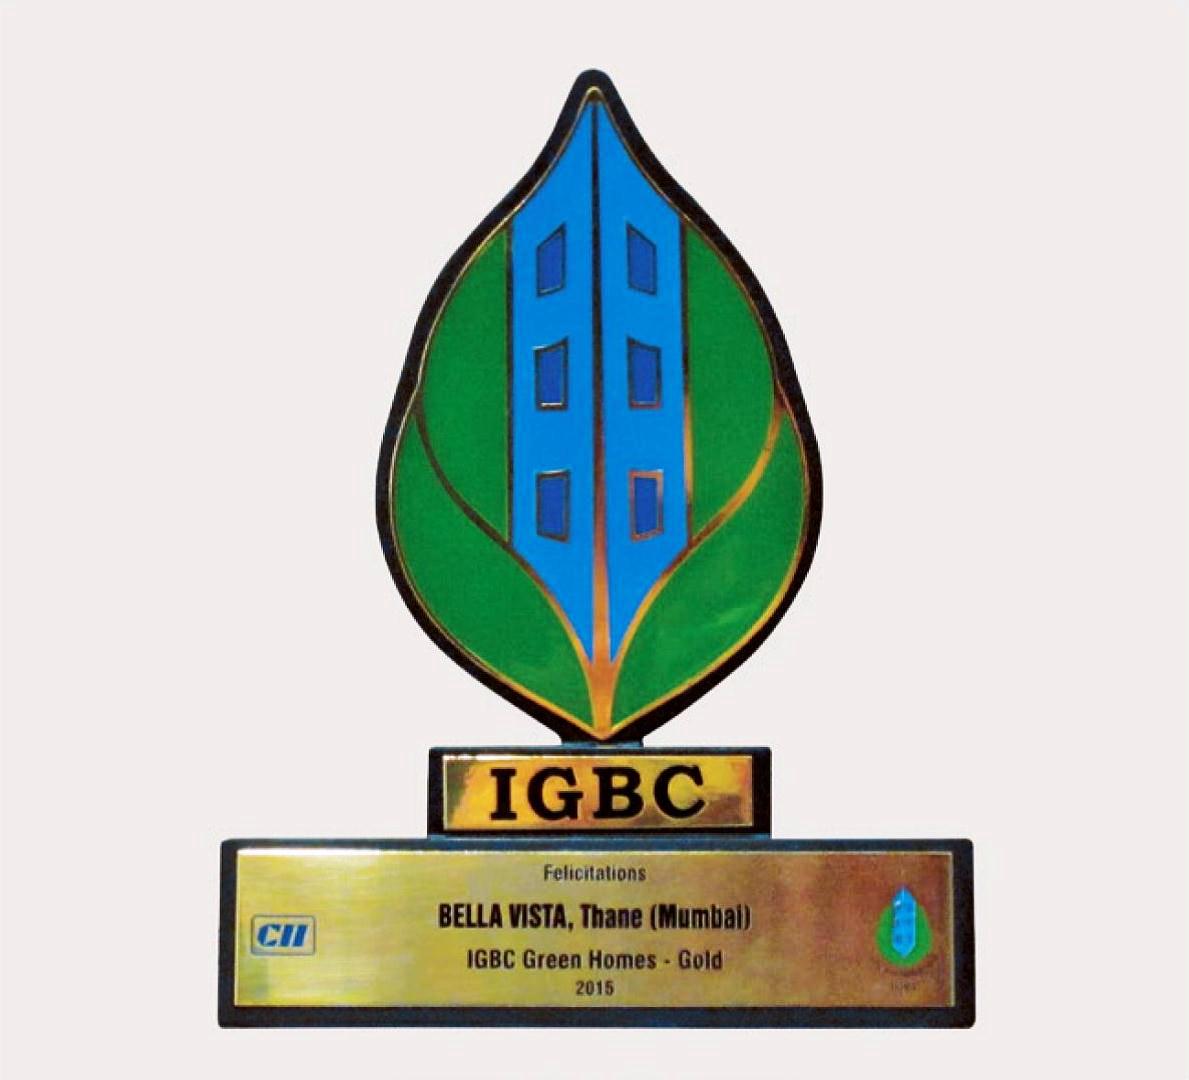 Vijay Group IGBC Green
Homes - Gold By CII & IGBC 2015